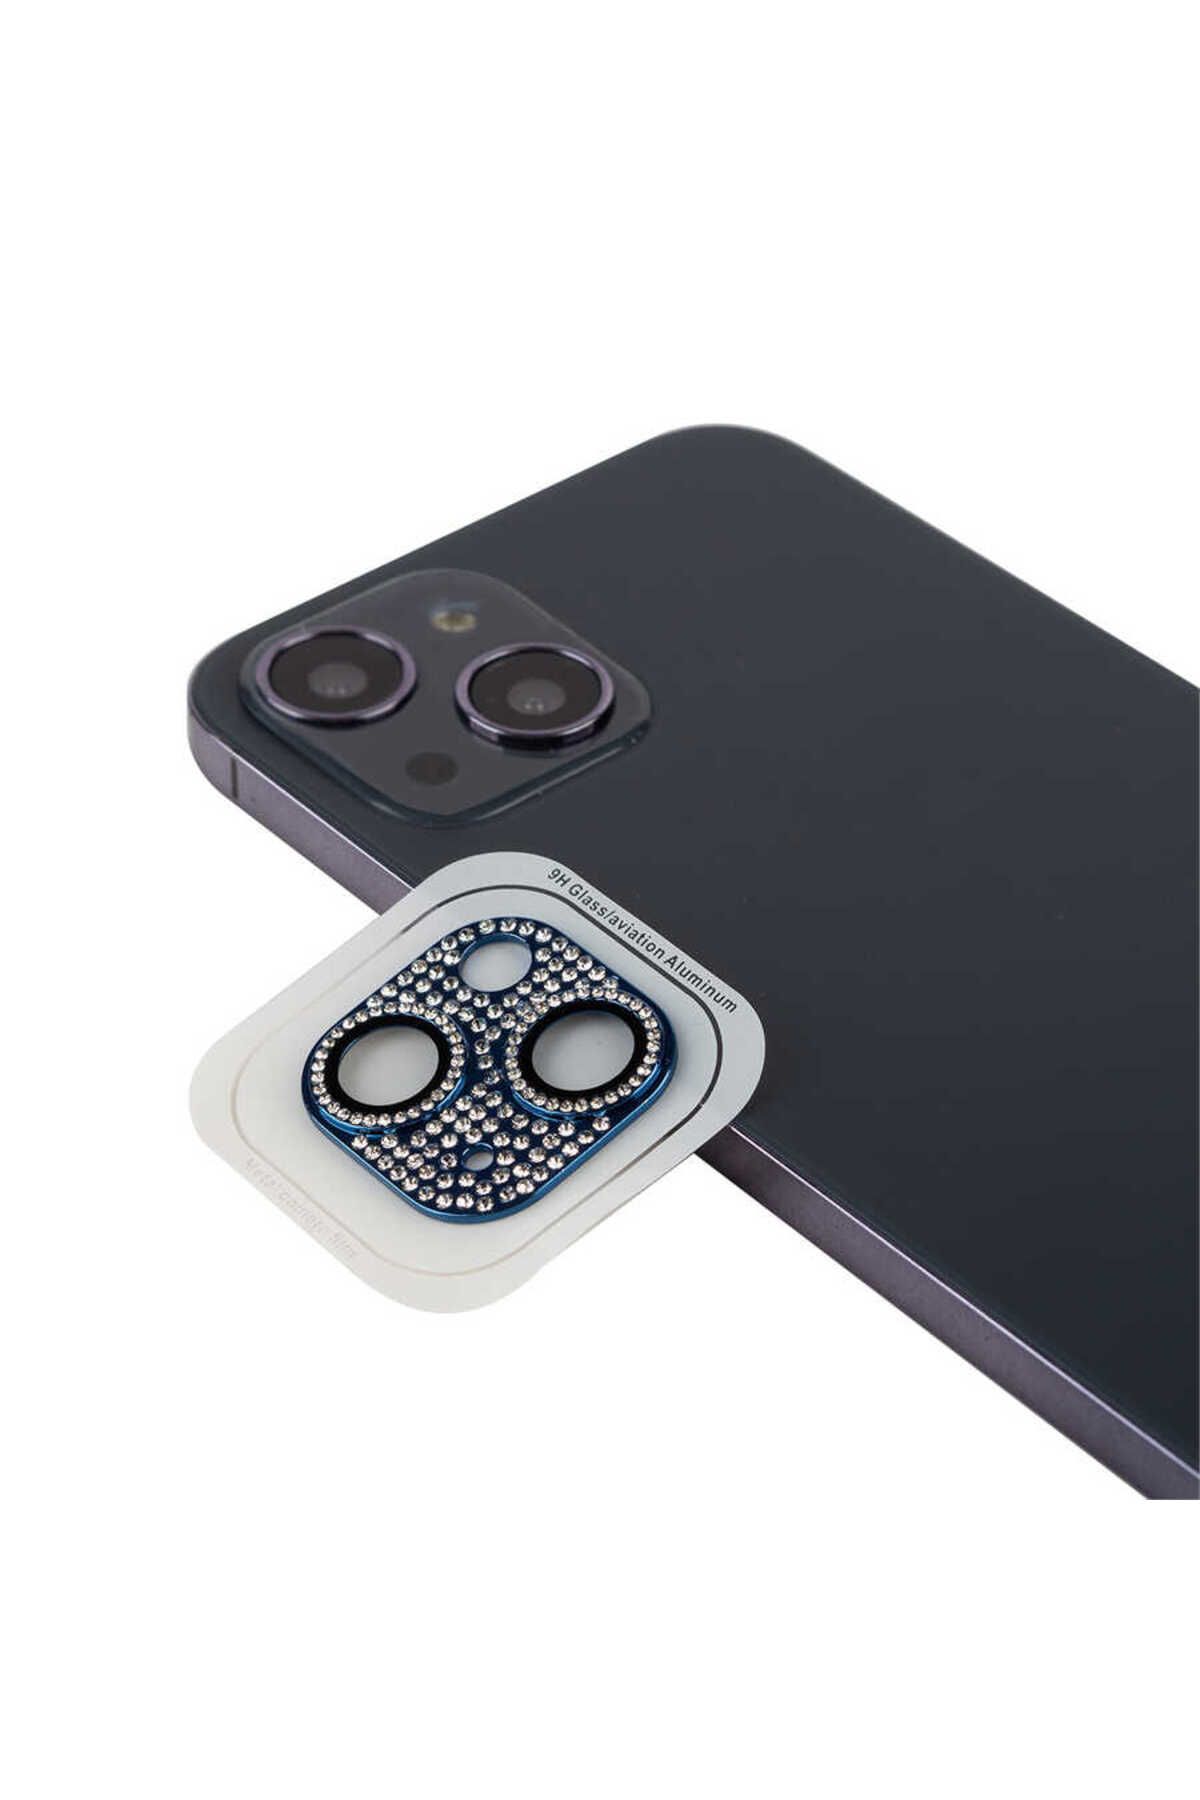 Zore iPhone 13 Mini Uyumlu Baltazar CL-08 Kamera Lens Koruyucu-Mavi